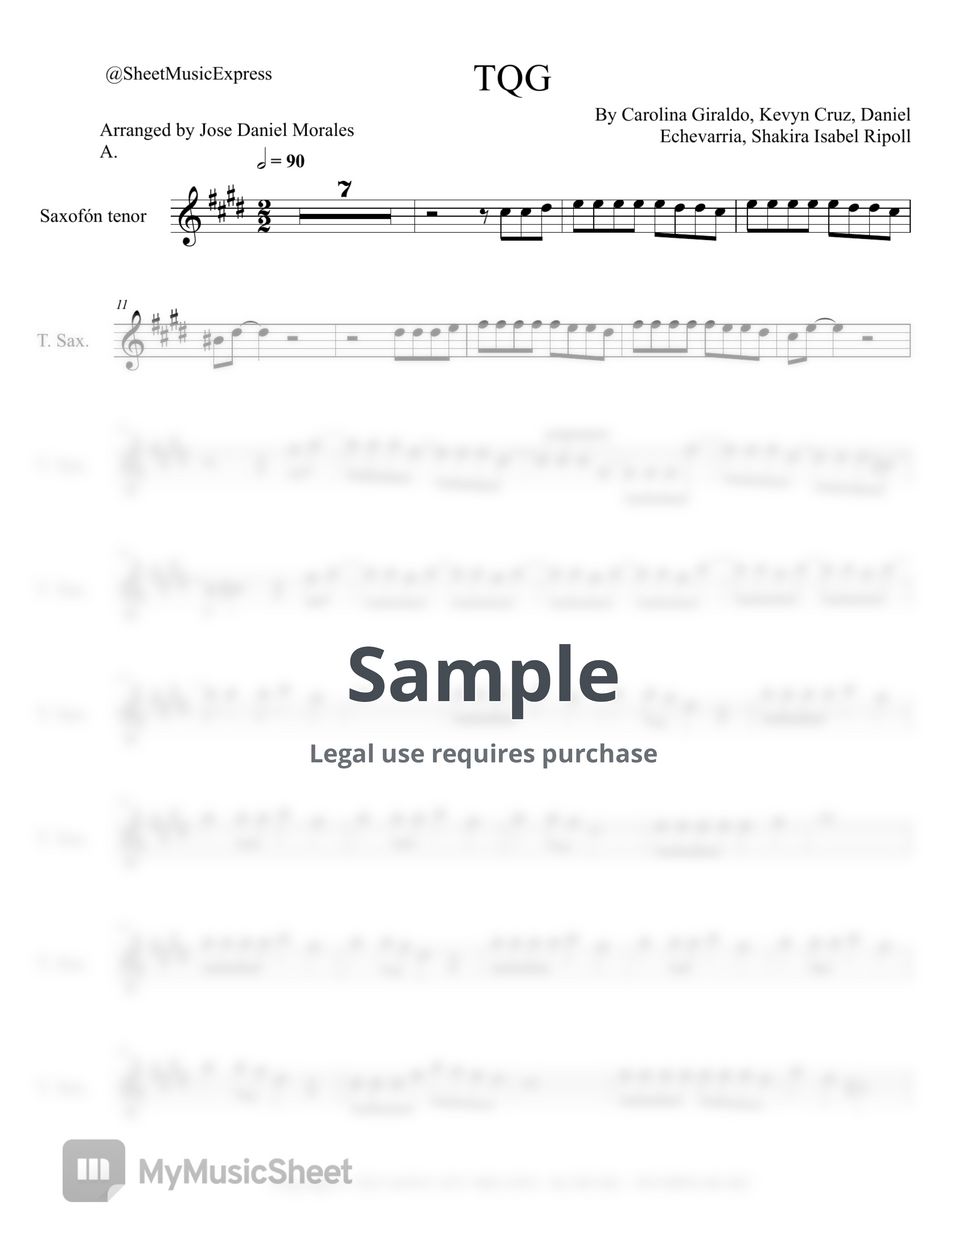 Karol G - TQG tenor sax (Latin) by Sheet Music Express